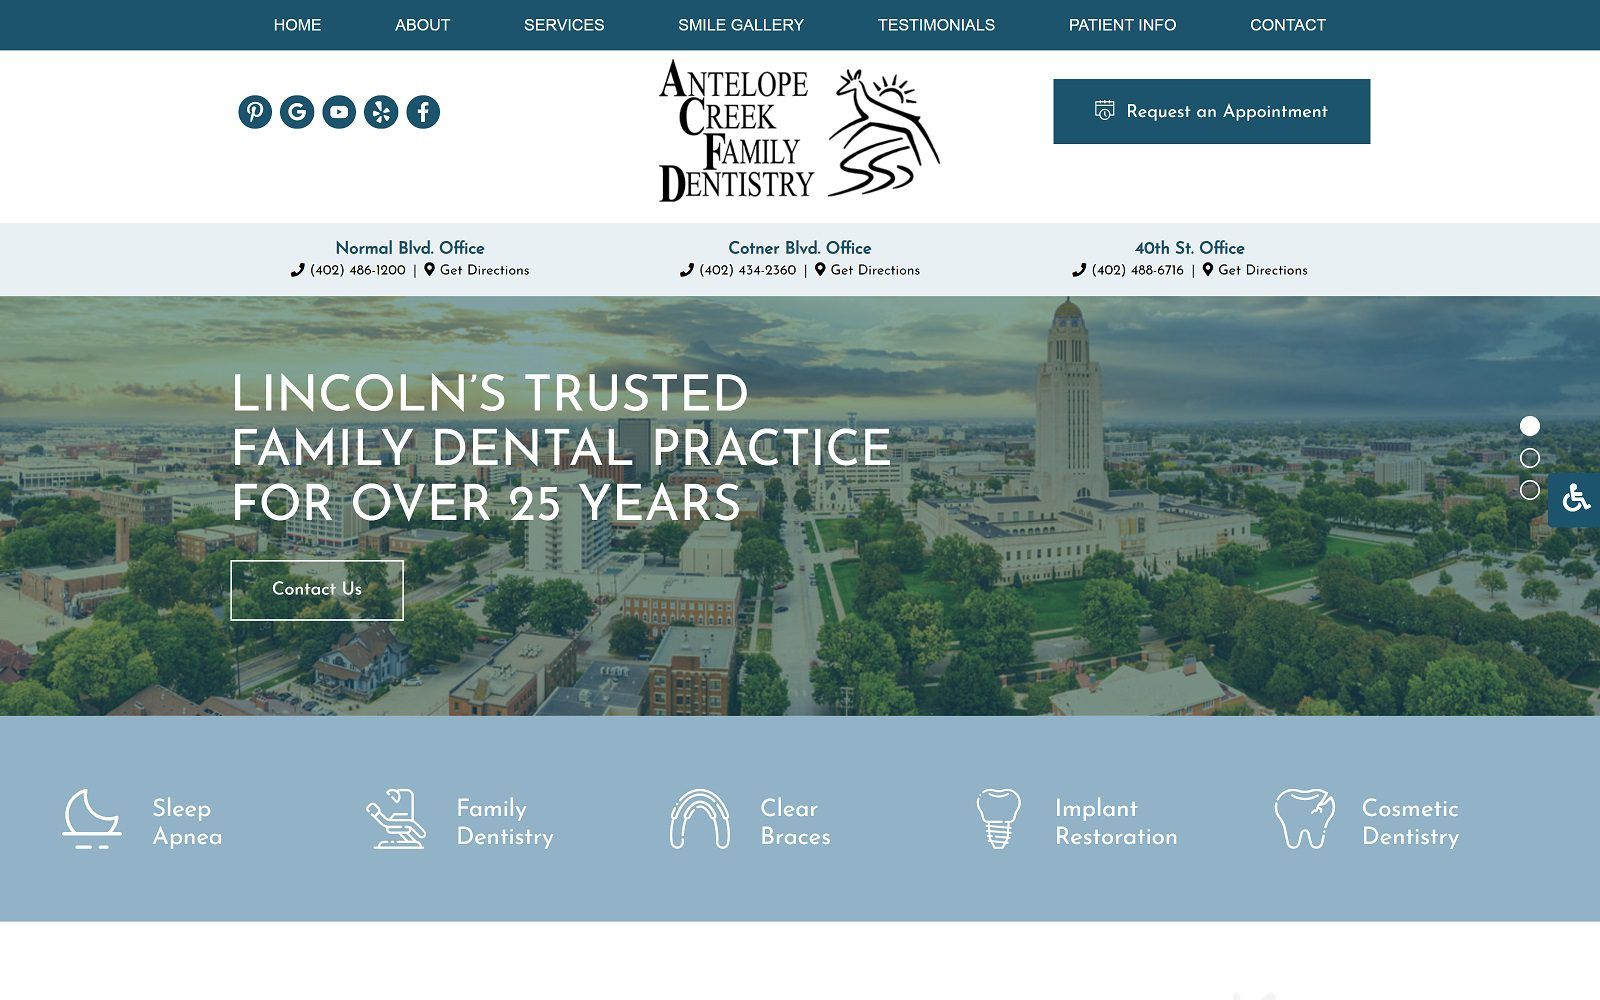 The screenshot of antelope creek family dentistry website